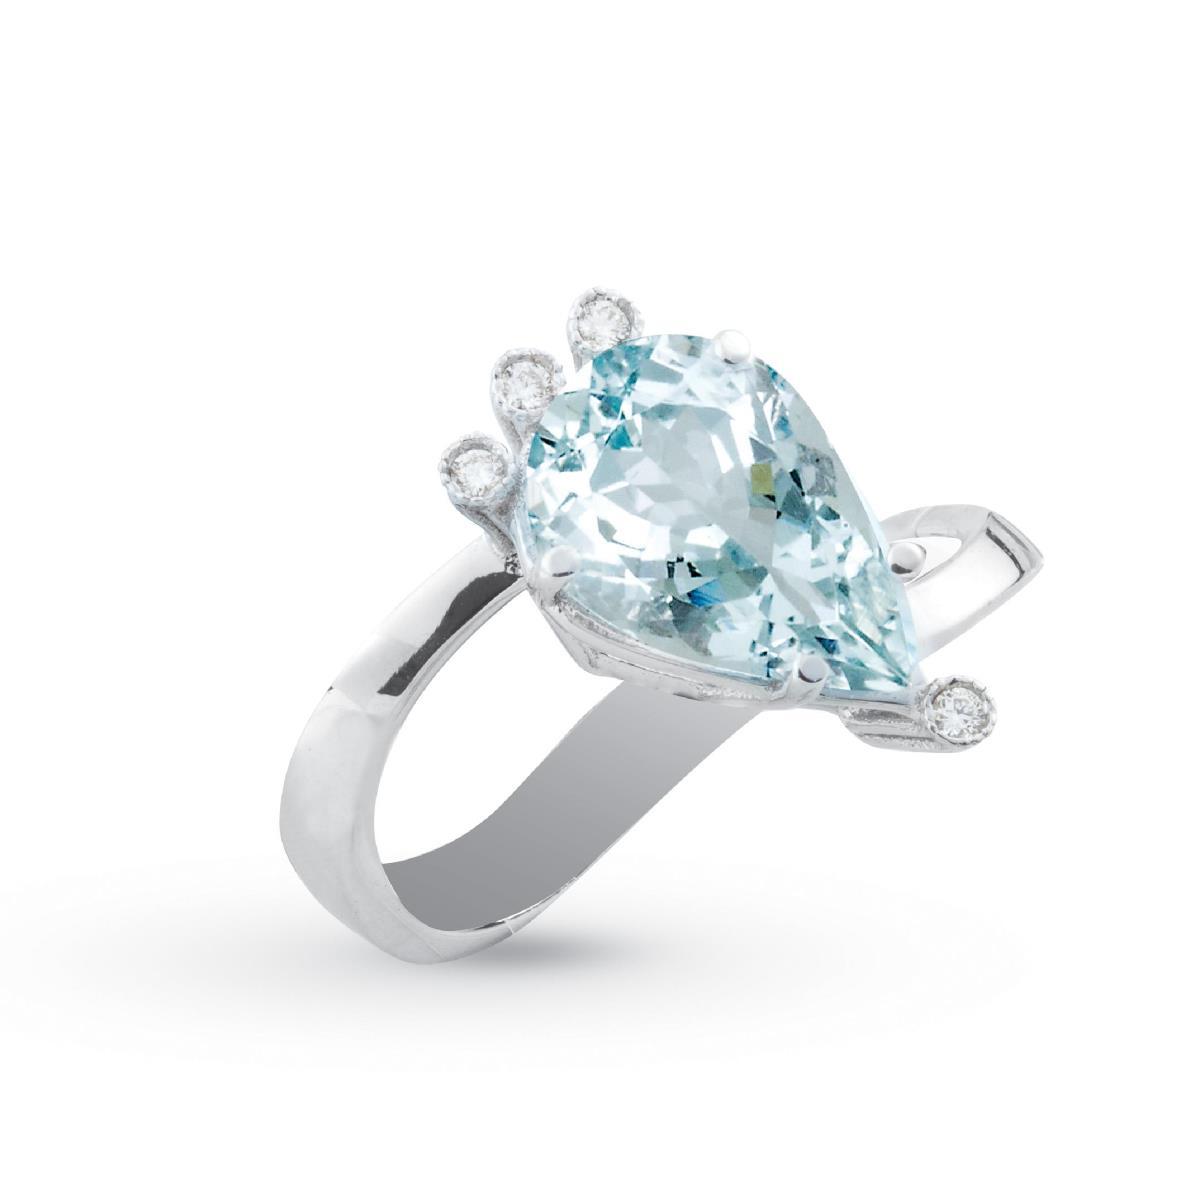 Gold ring with aquamarine and diamonds - AD539-LB